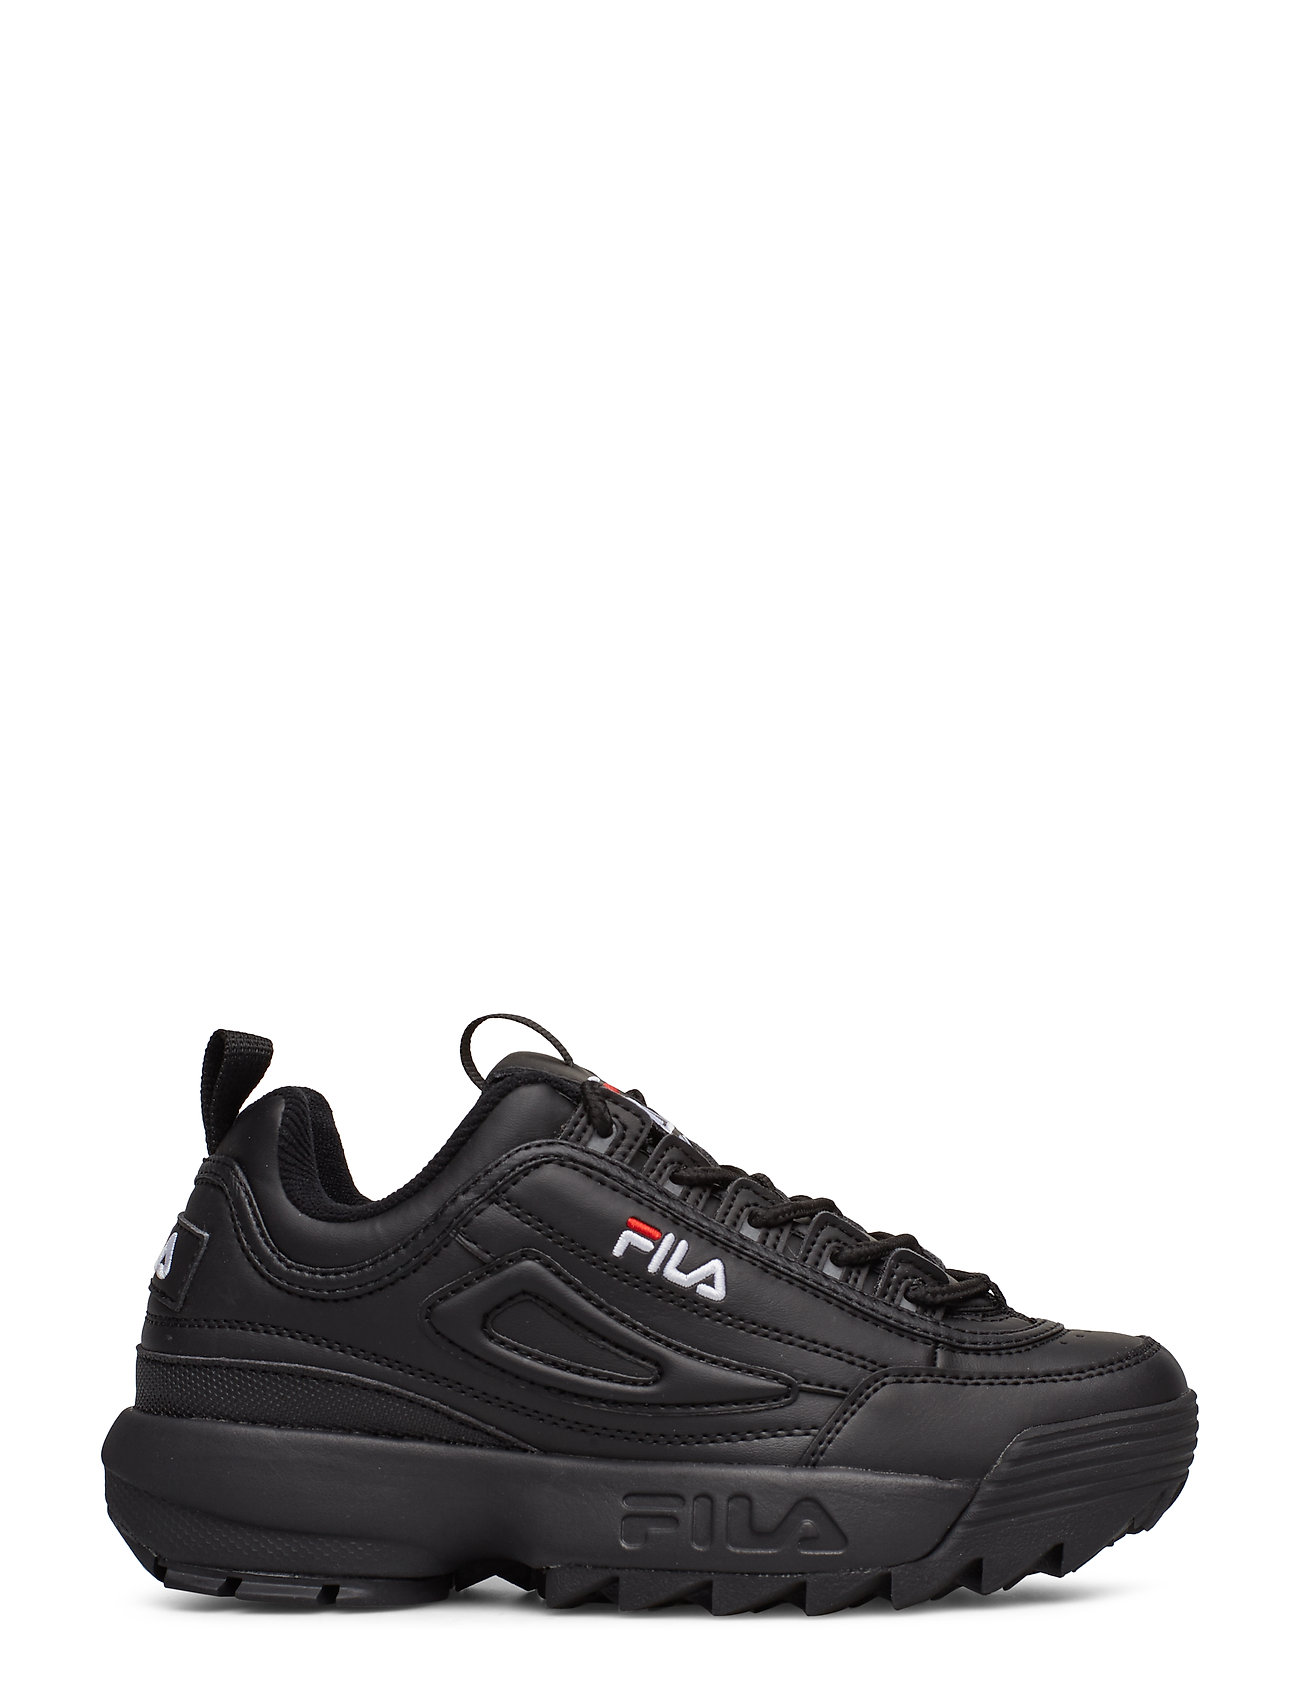 FILA - DISRUPTOR wmn - chunky sneaker - black/black - 1